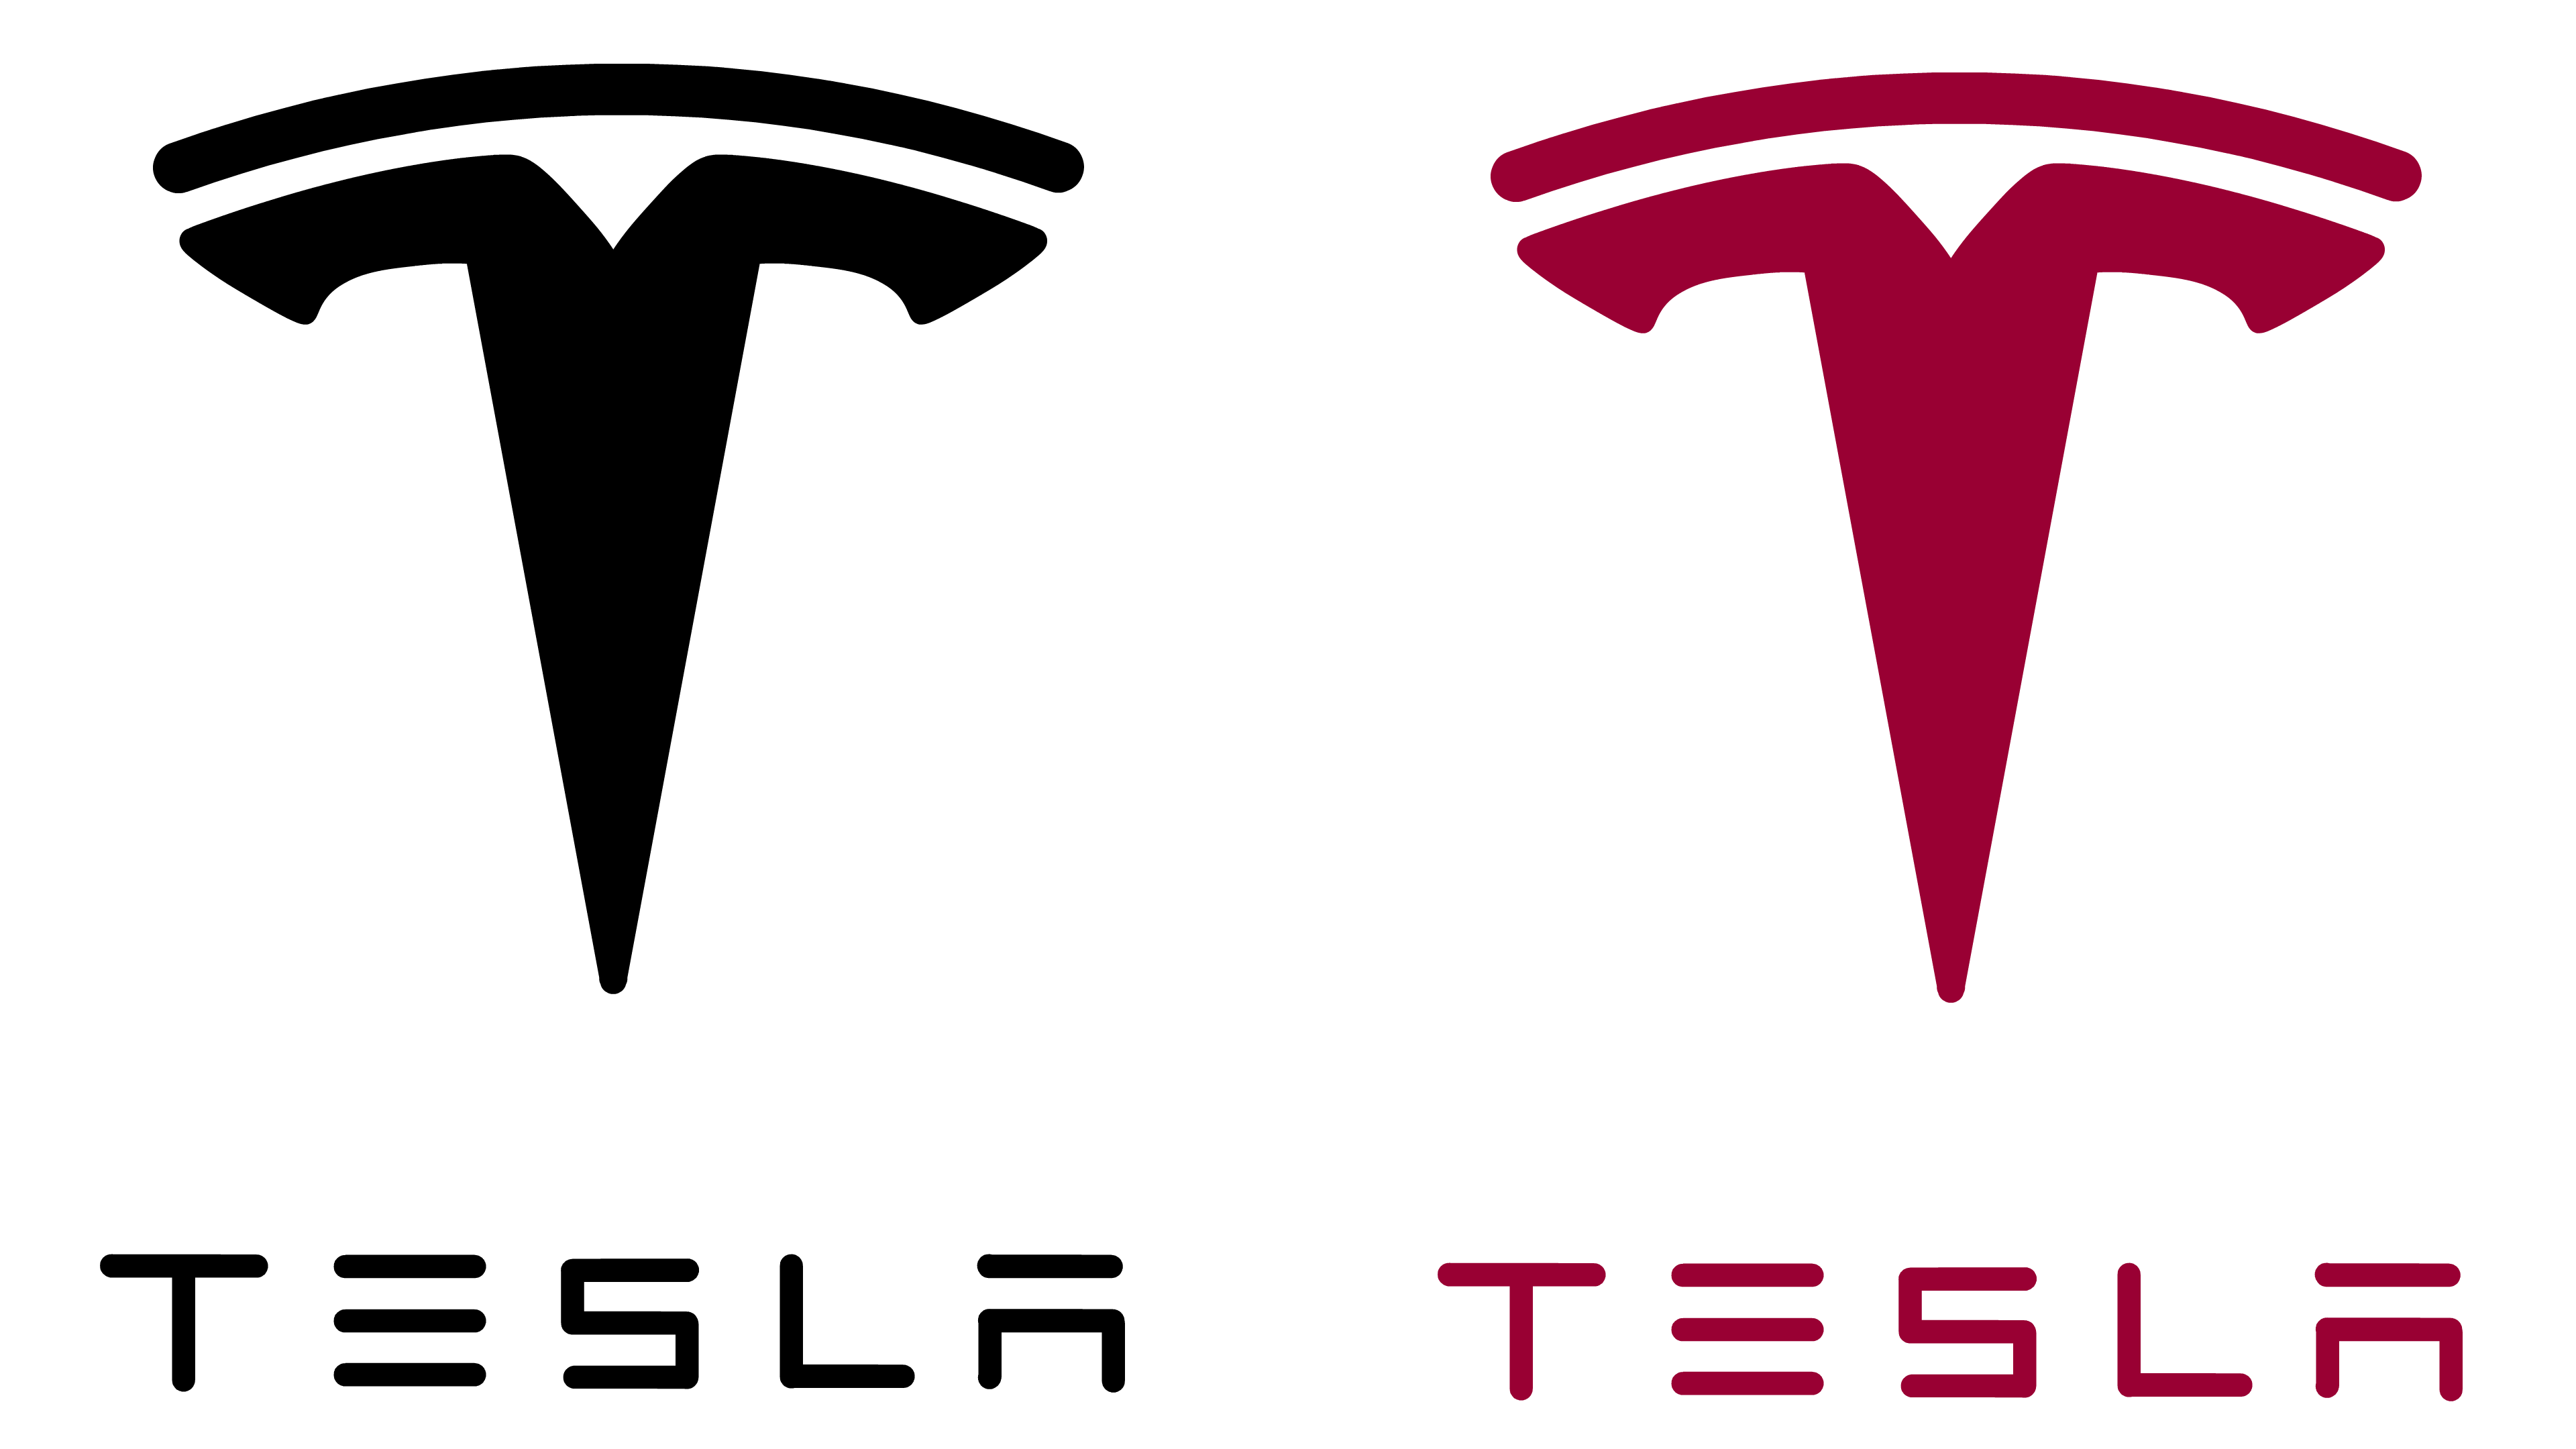 Tesla.organic - Tesla.organic updated their profile picture.